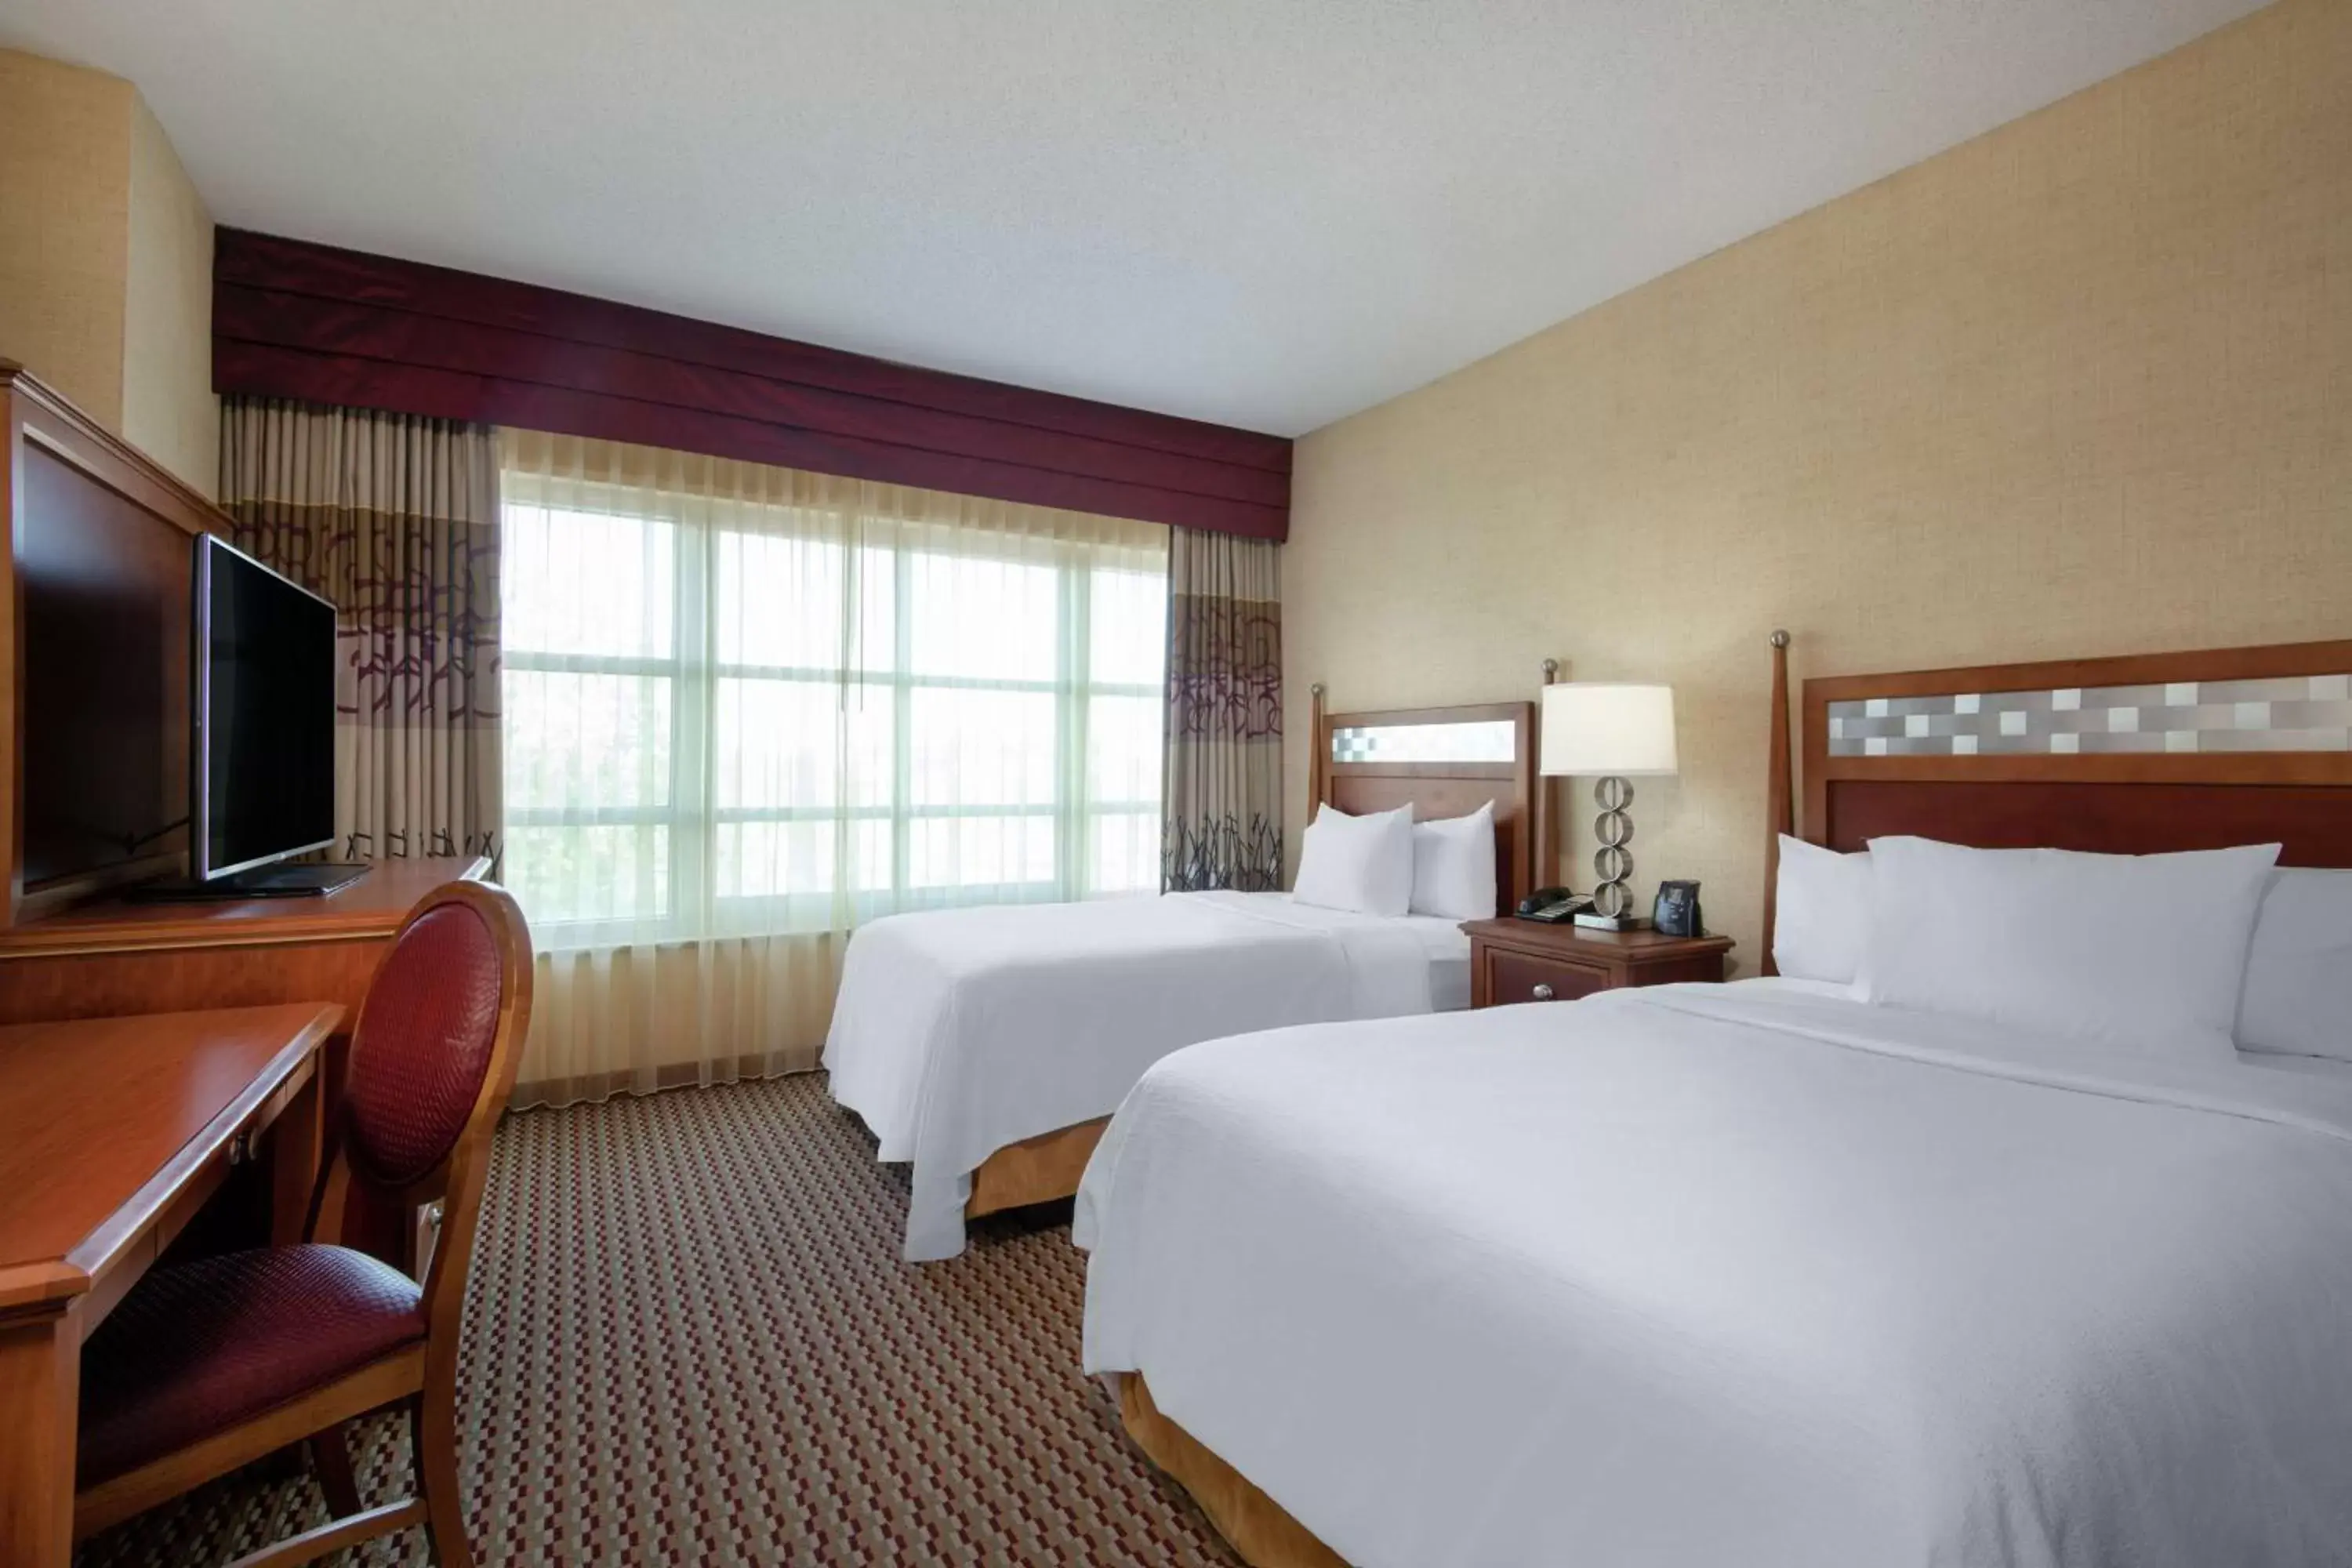 Bedroom in Embassy Suites Northwest Arkansas - Hotel, Spa & Convention Center